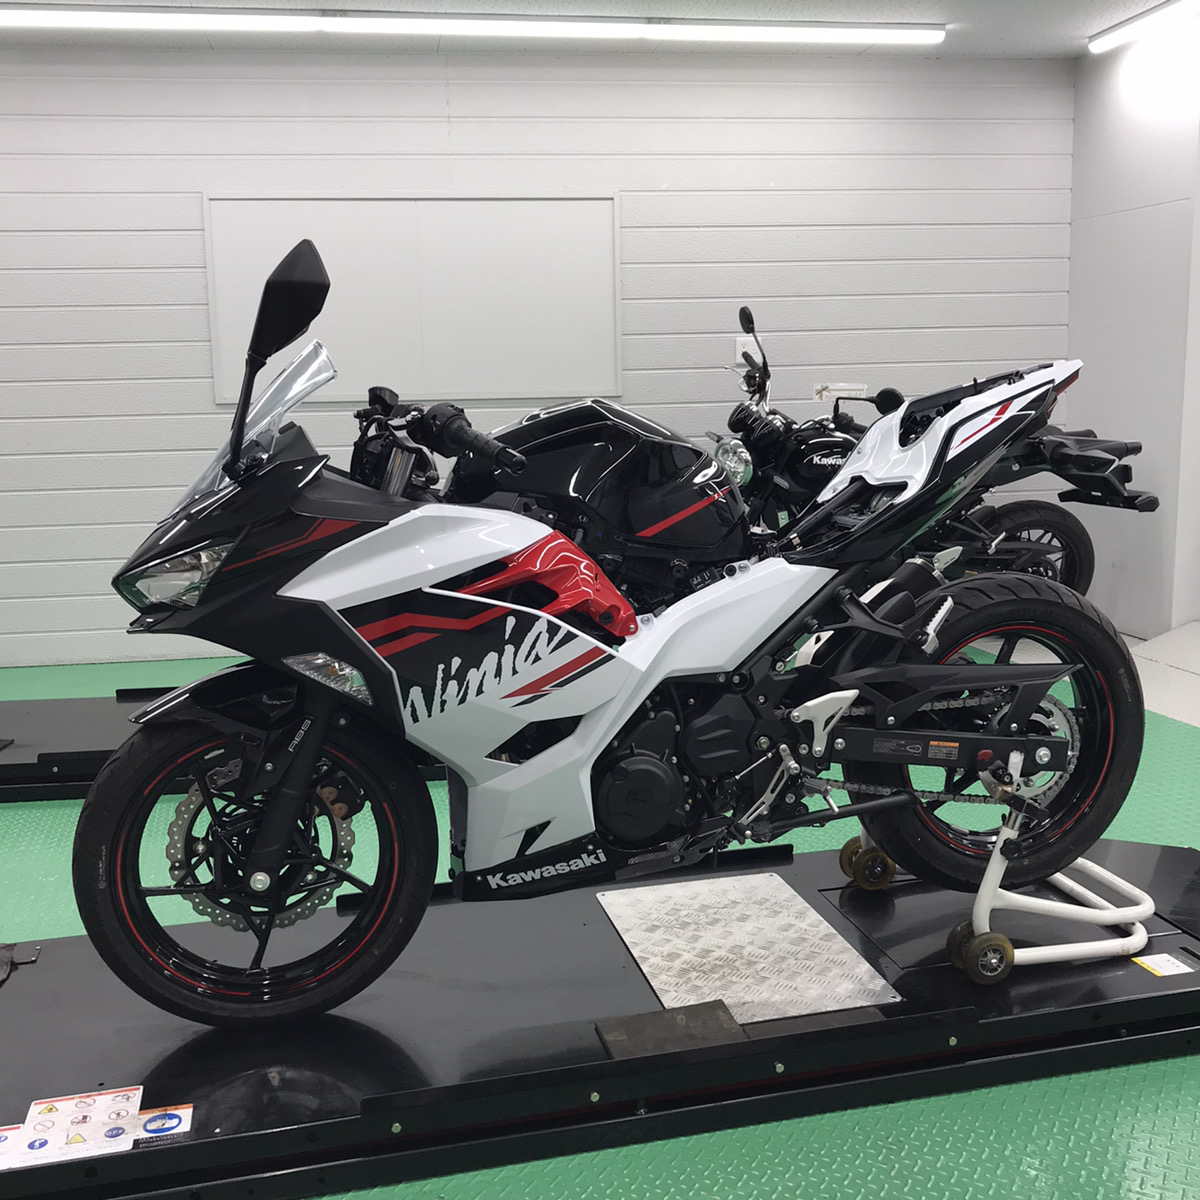 Ninja 250 入荷で整備中 国産車ブログ 丸富オート販売 横浜 湘南でバイクの購入 修理 レンタルバイク バイク のことなら何でもおまかせ